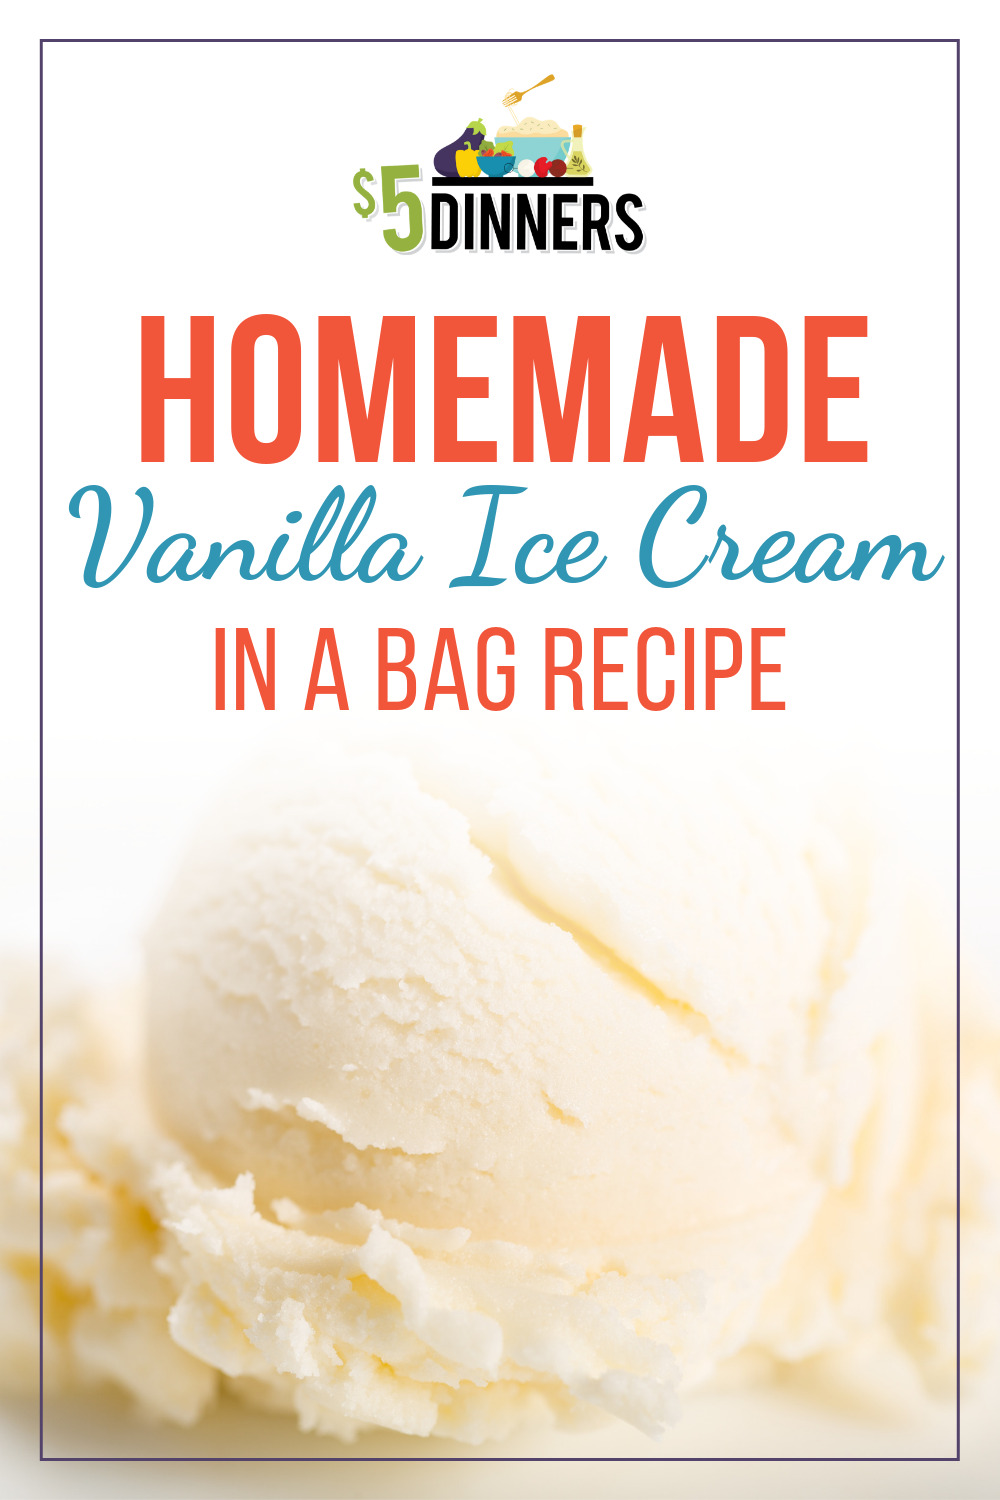 Best Homemade Ice Cream in a Bag Recipe - $5 Dinners